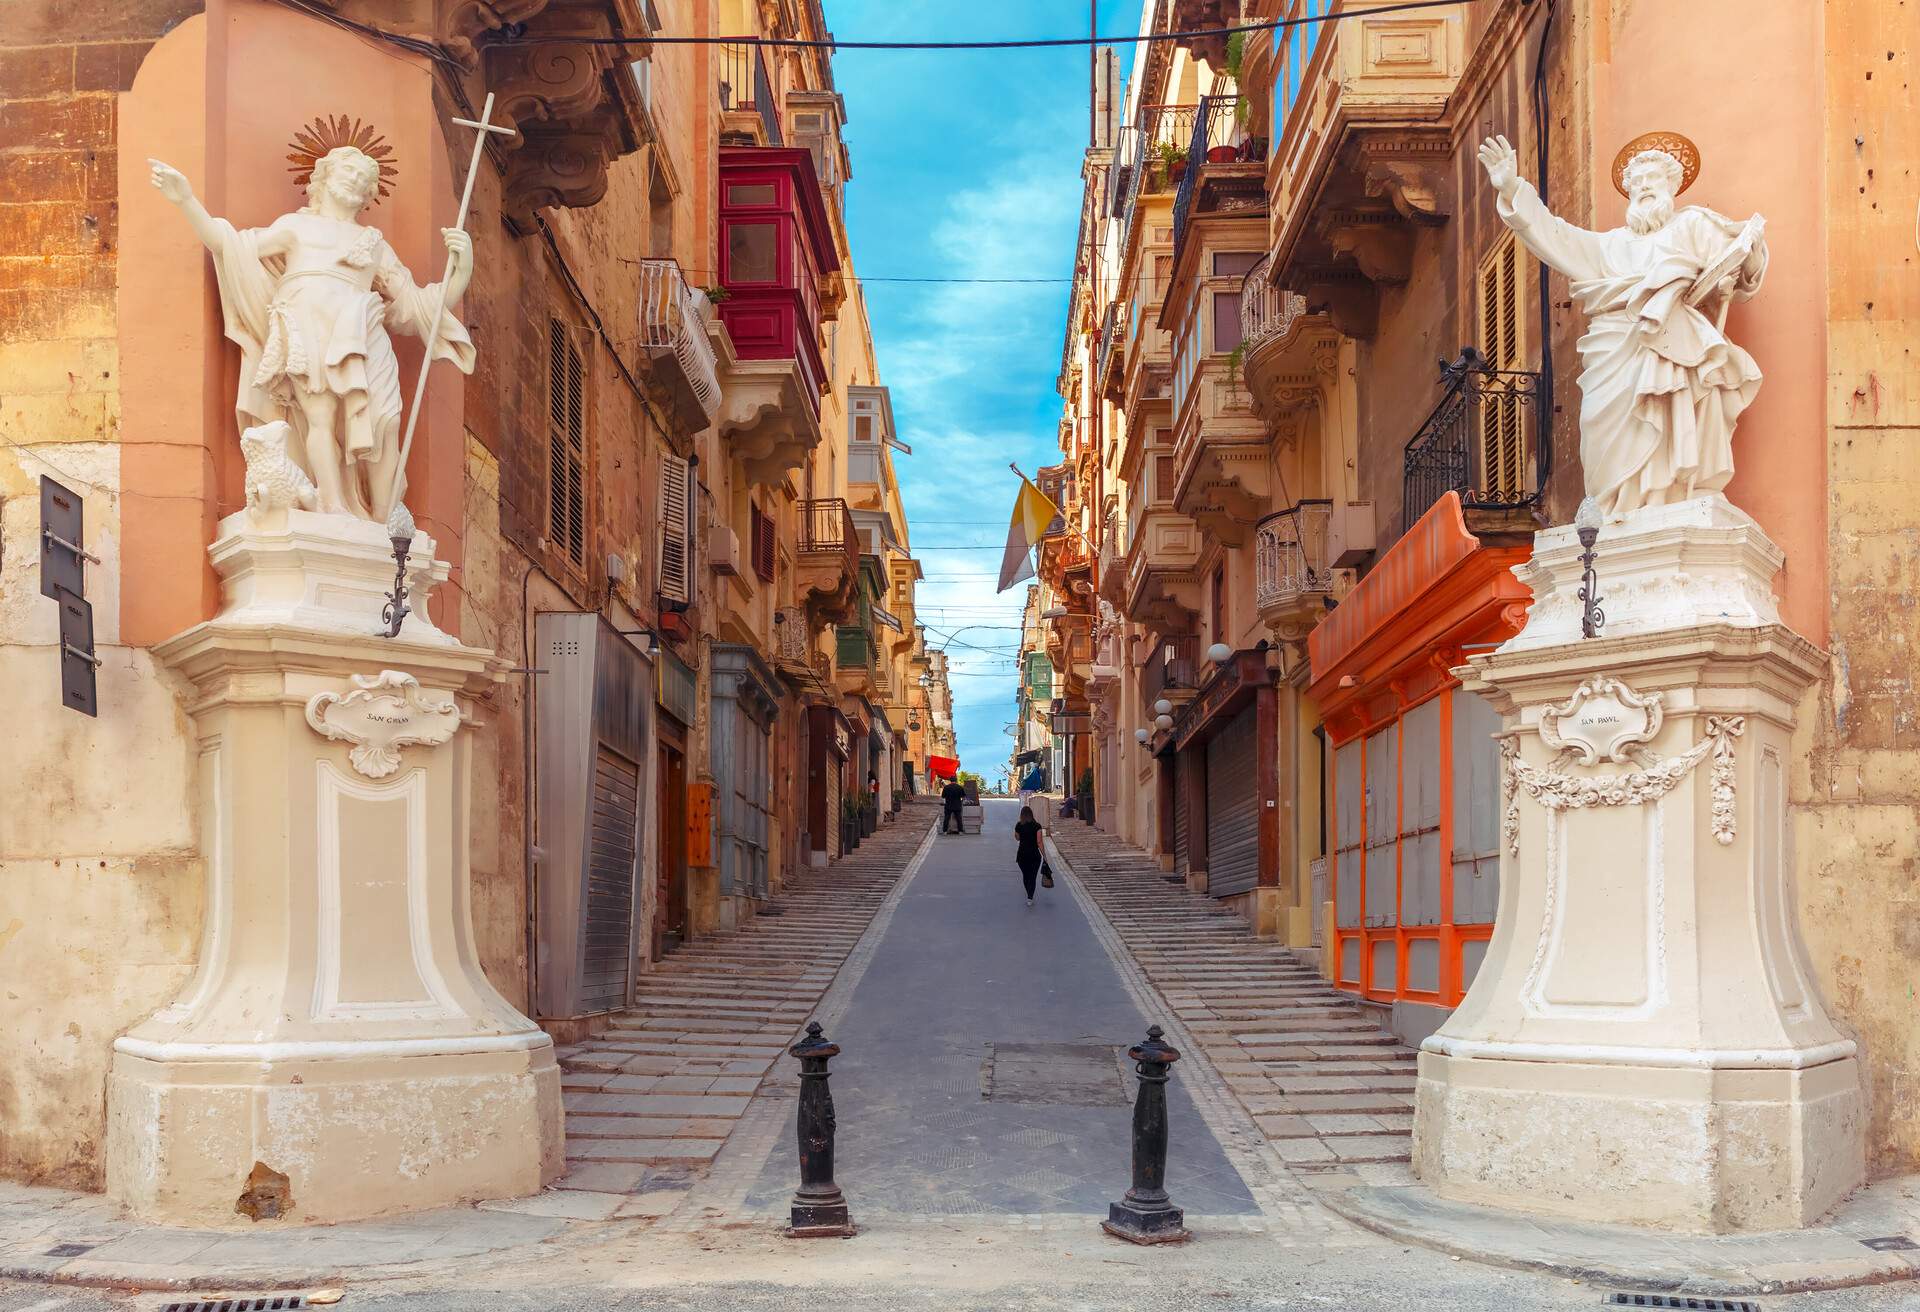 Street view of old buildings in Valletta, Malta